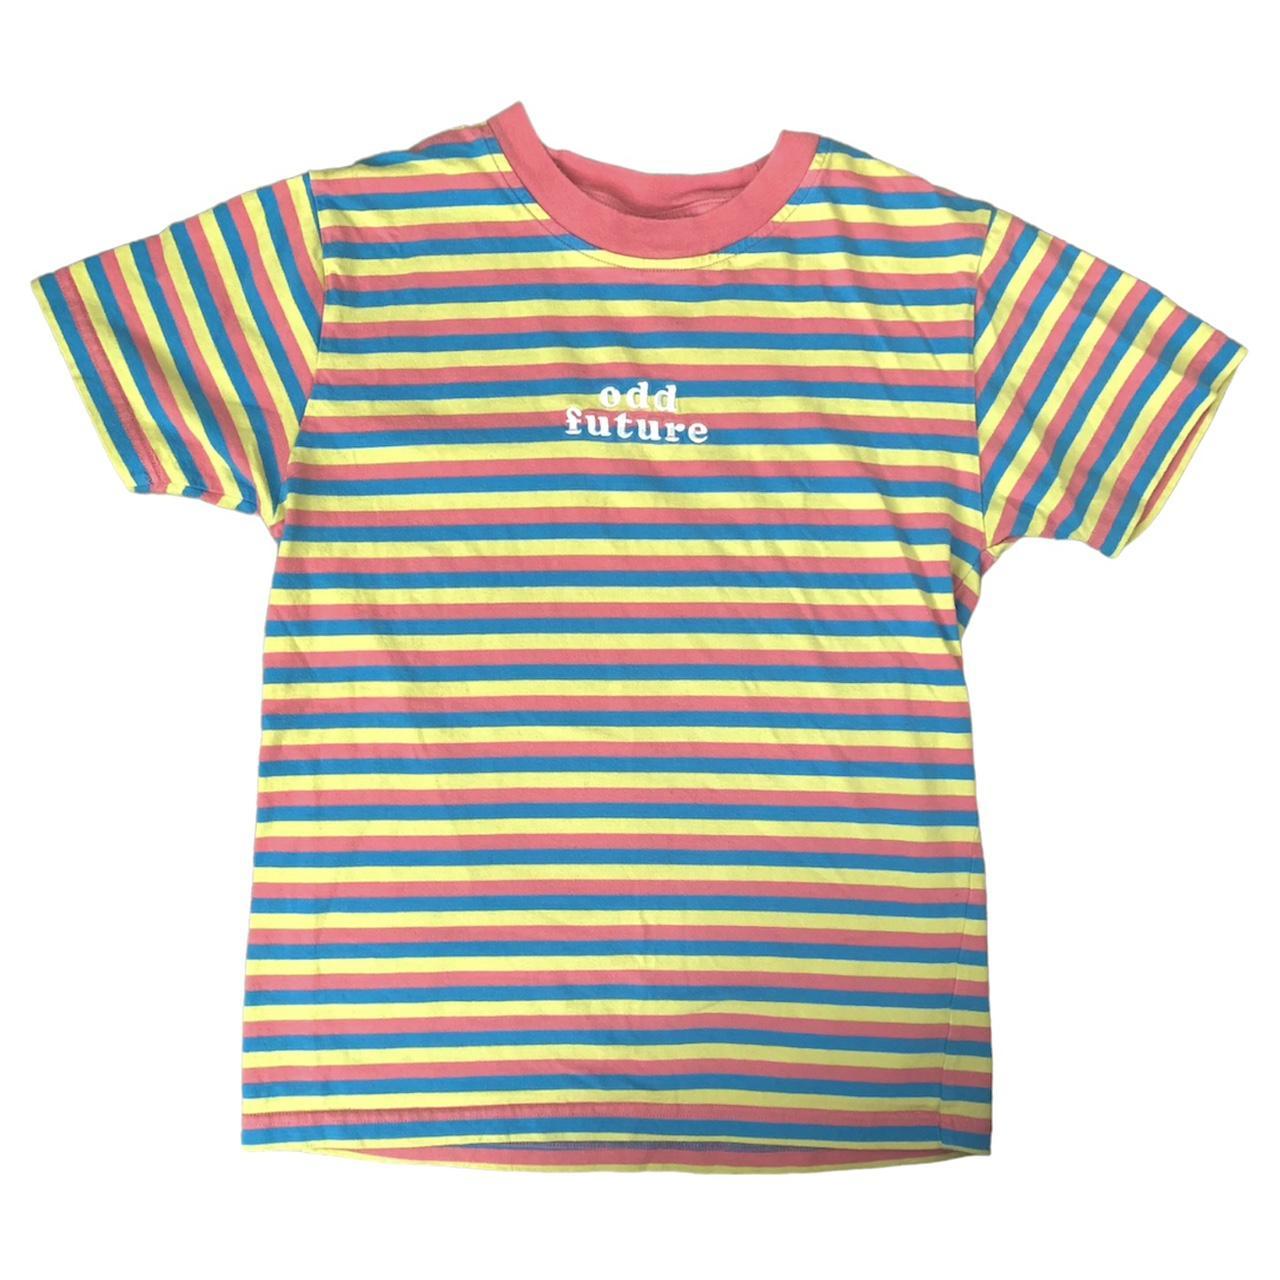 odd future striped t-shirt -pink, blue,... - Depop